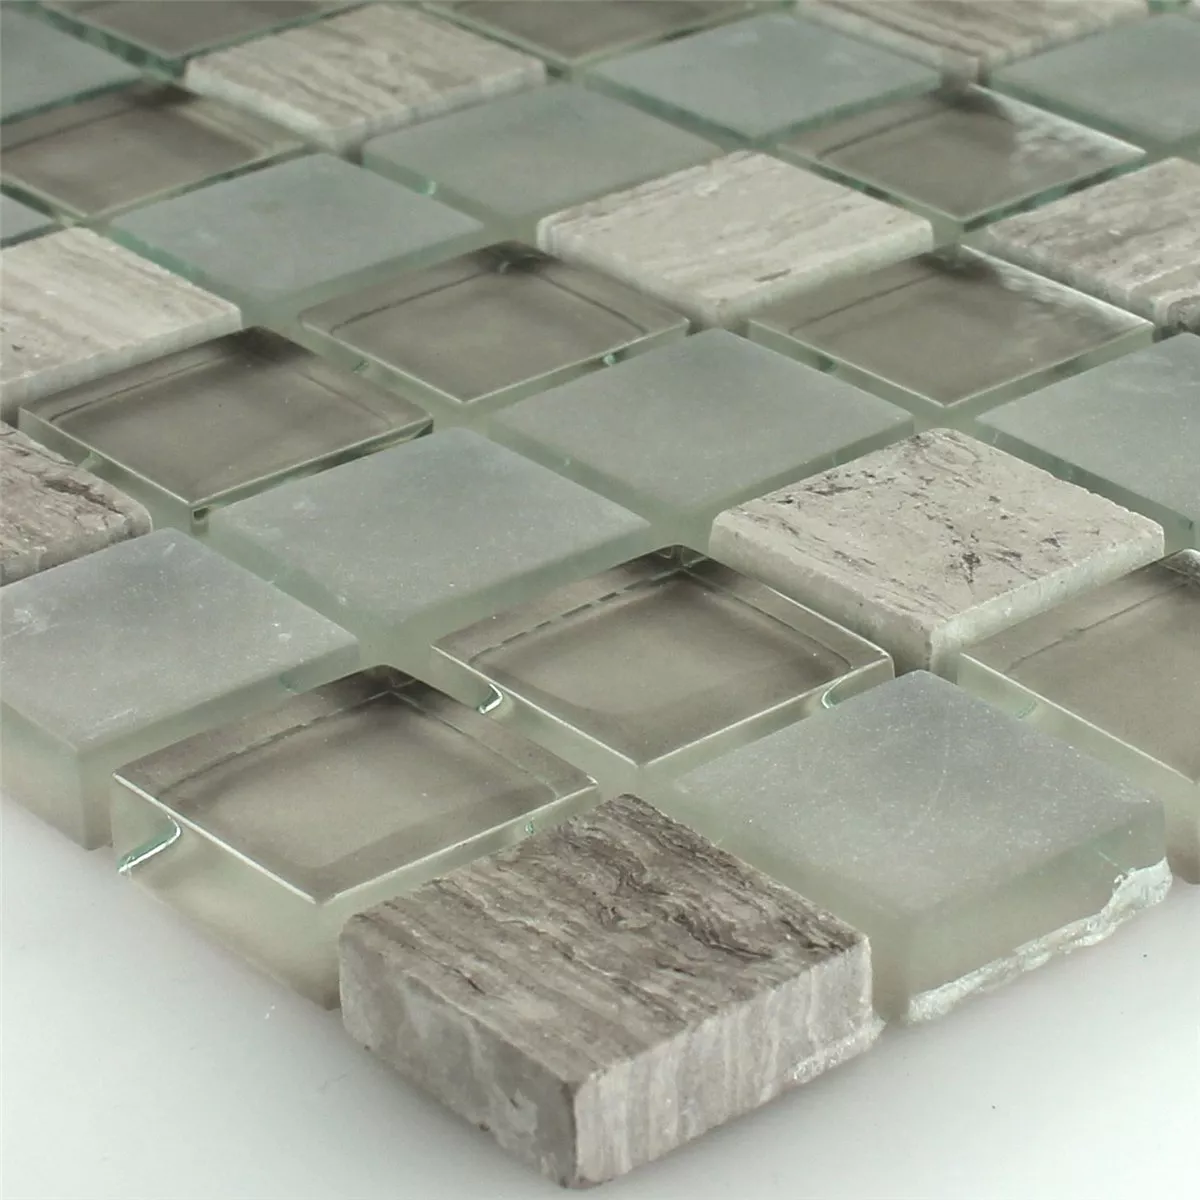 Sample Mosaic Tiles Glass Marble Burlywood 